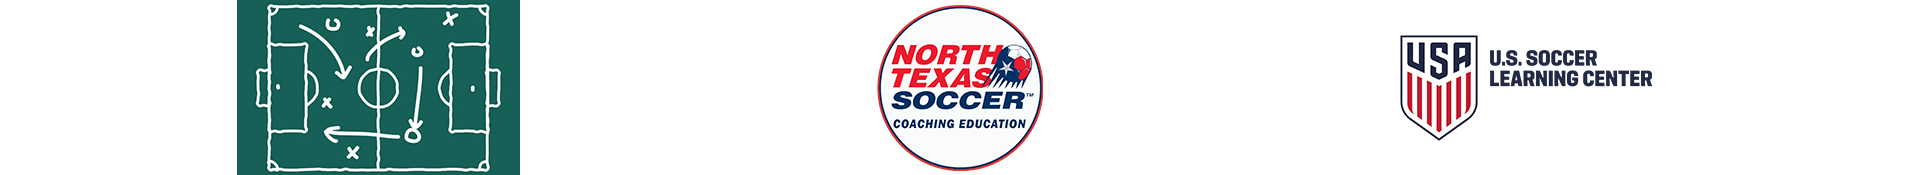 Coaching_Education_Banner